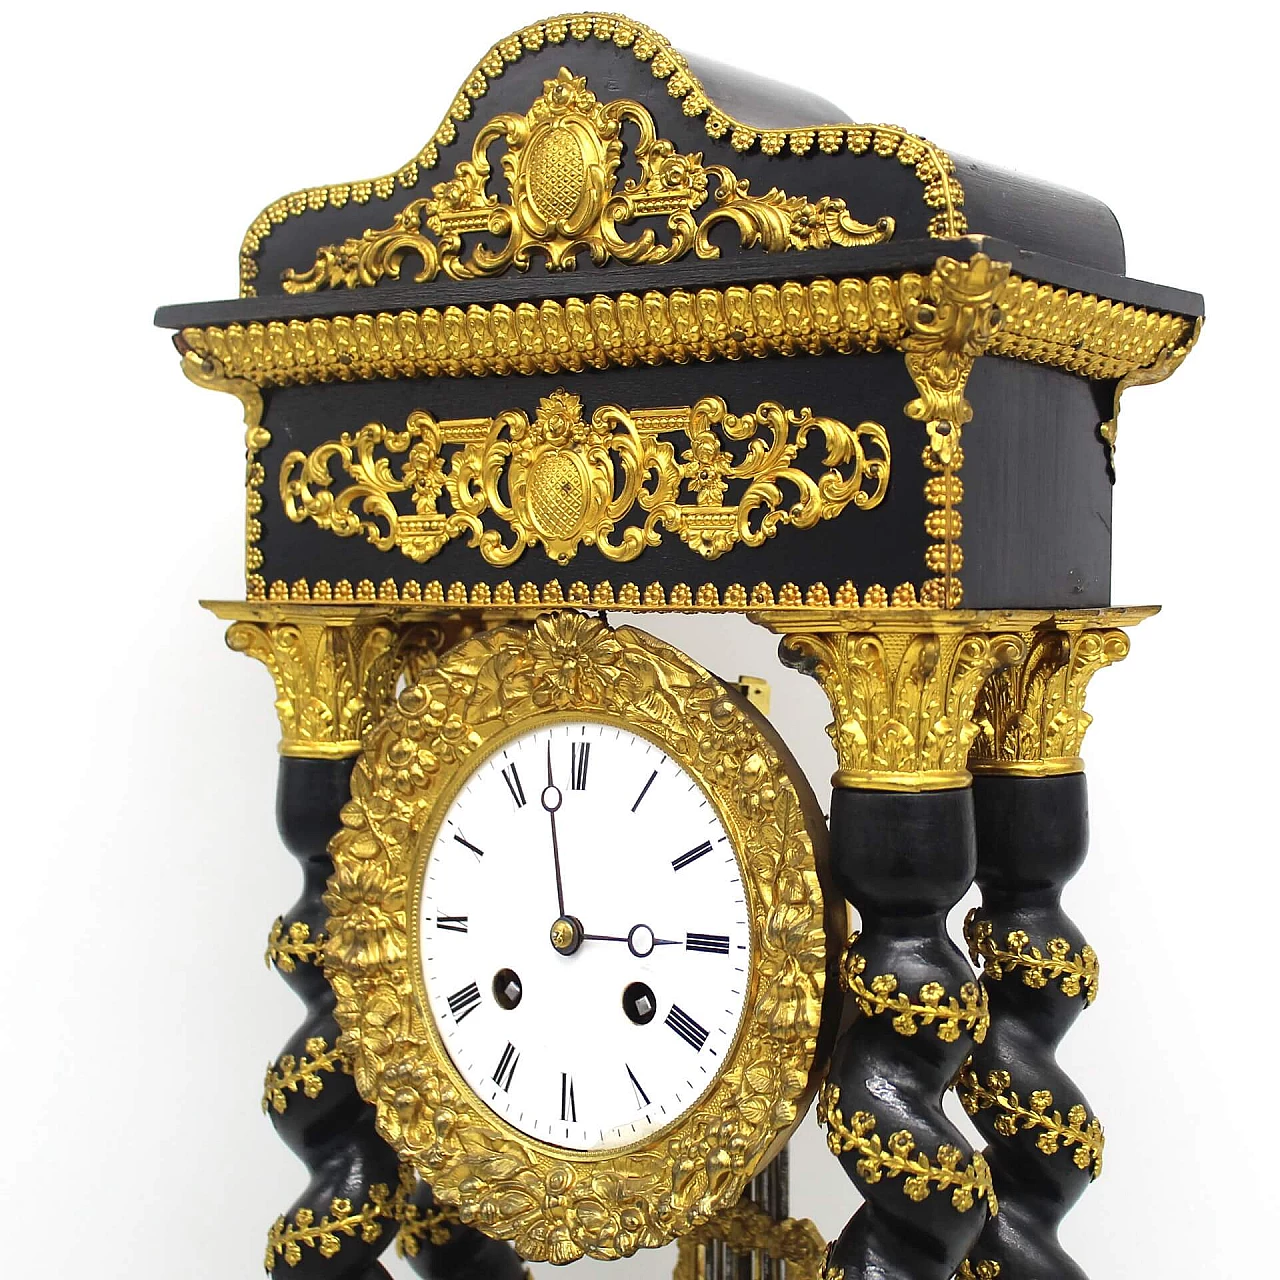 Napoleon III pendulum clock in ebonized wood and gilded bronzes, 19th century. 1336767